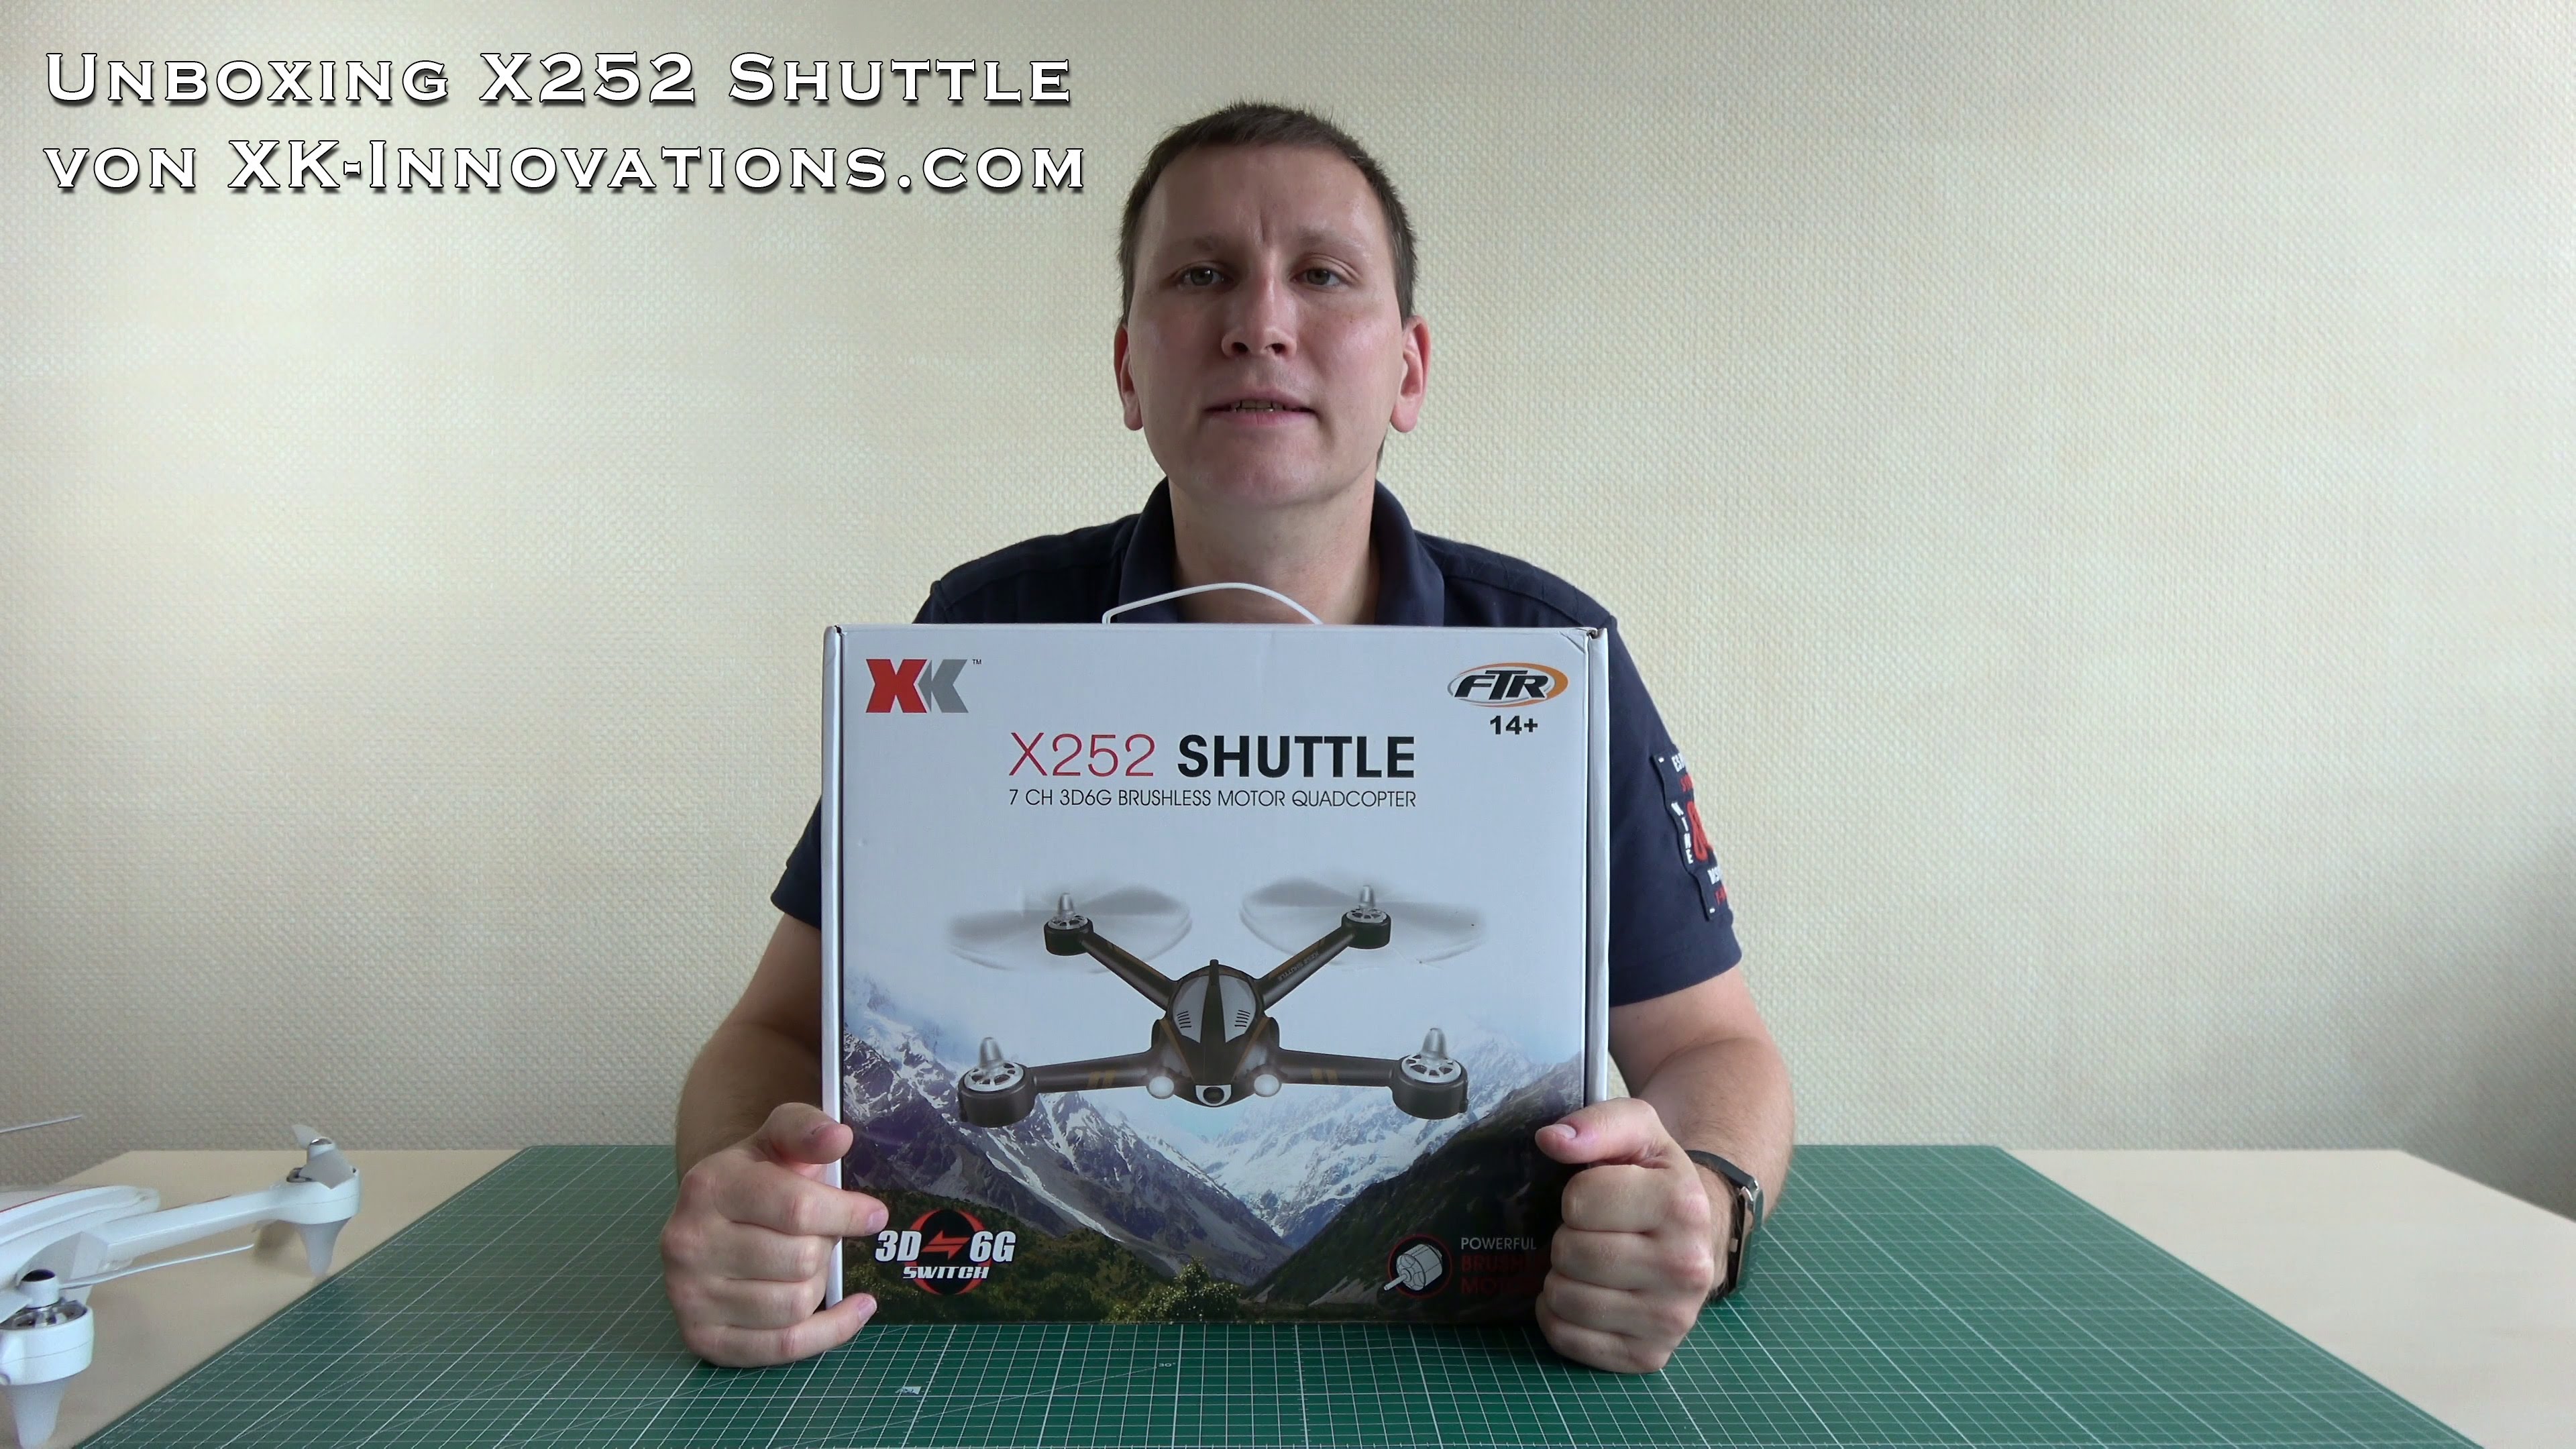 1 – Shuttle X252 – Unboxing (deutschgerman)